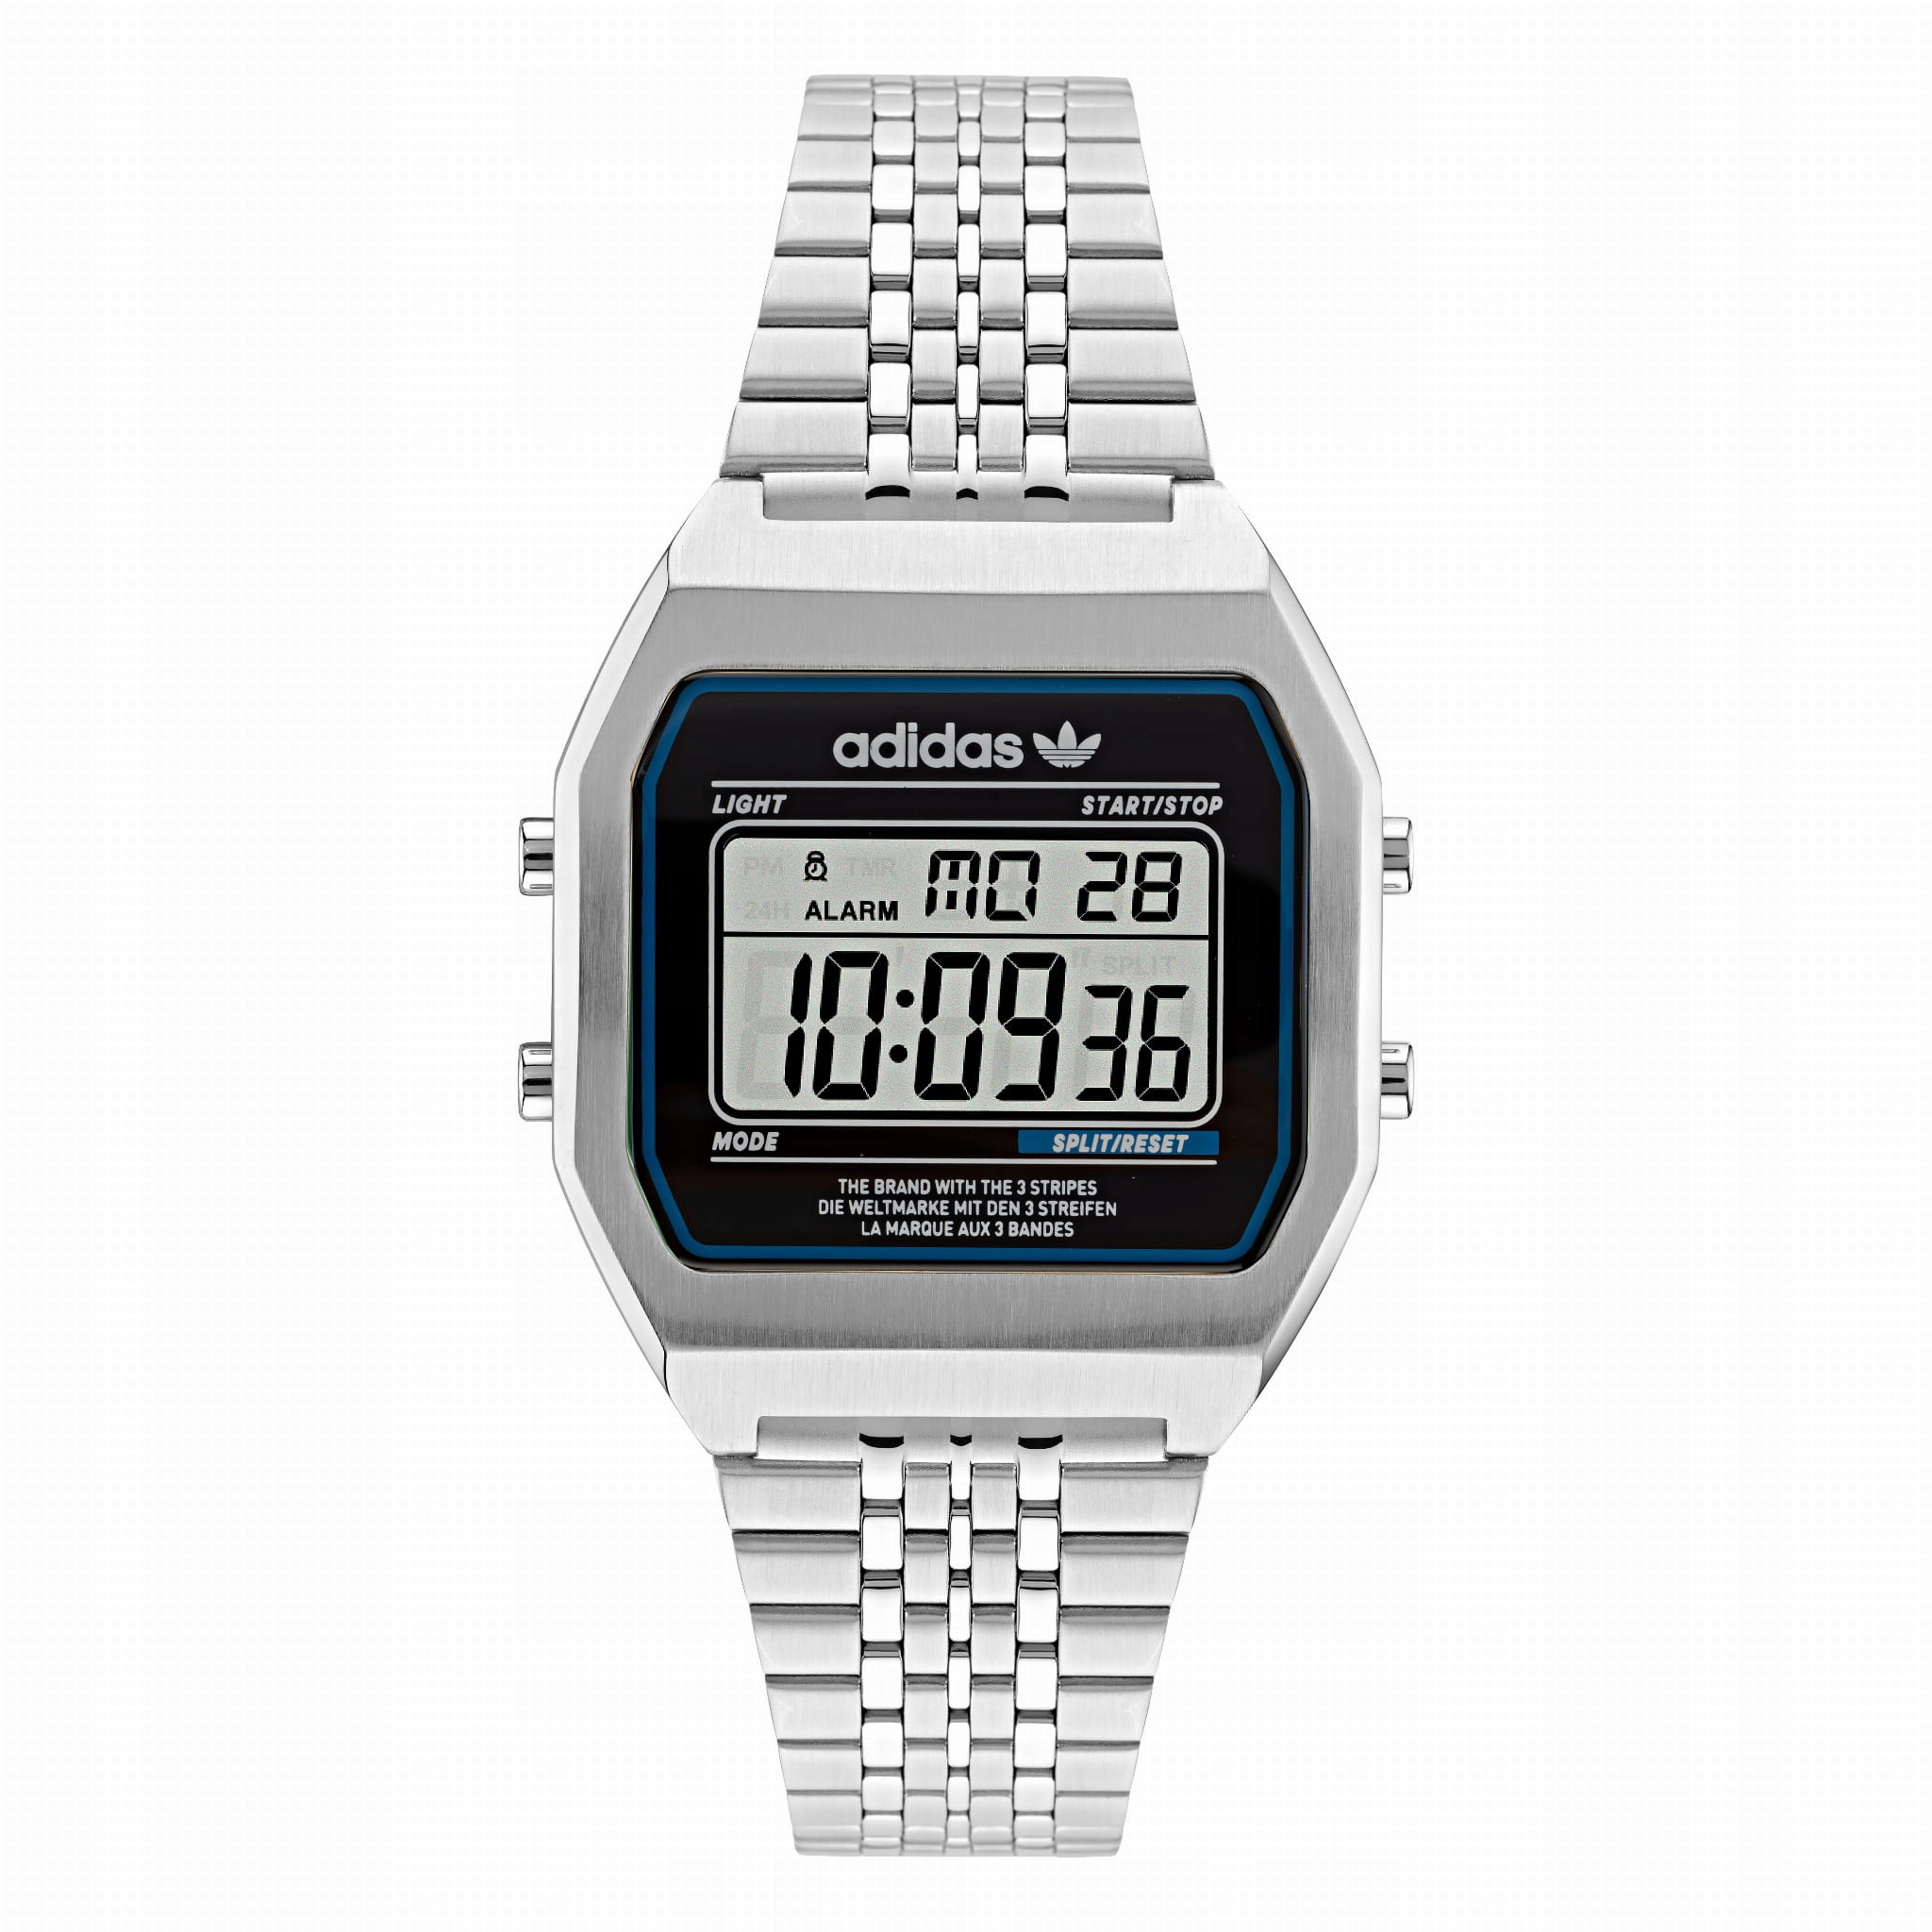 Adidas Originals zegarek - Produkt uniseks - porównaj ceny - Allegro.pl